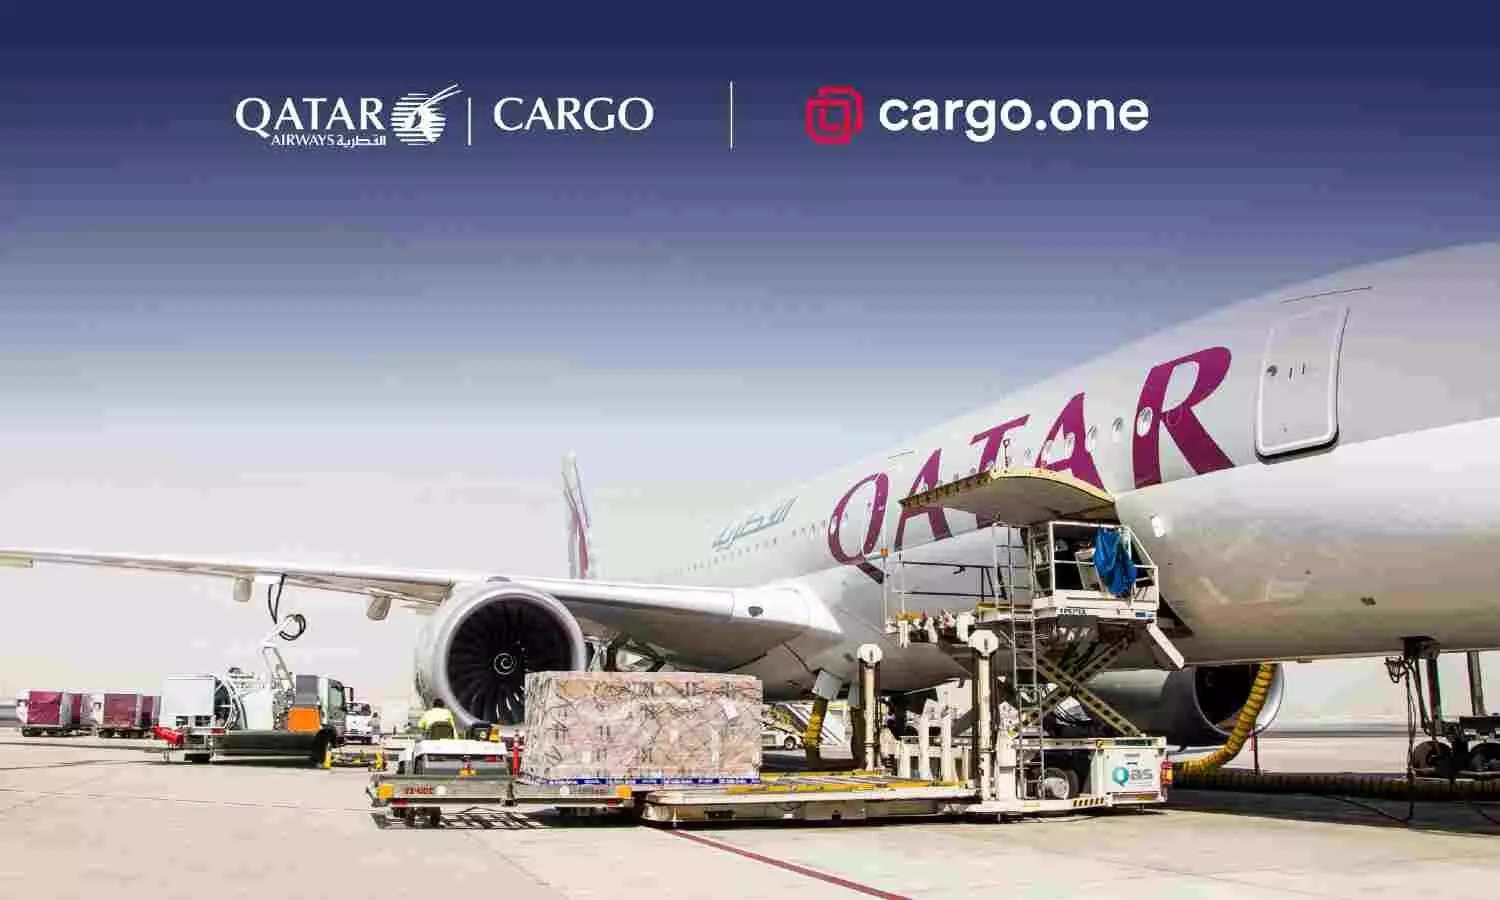 cargo.one unveils global partnership with Qatar Airways Cargo